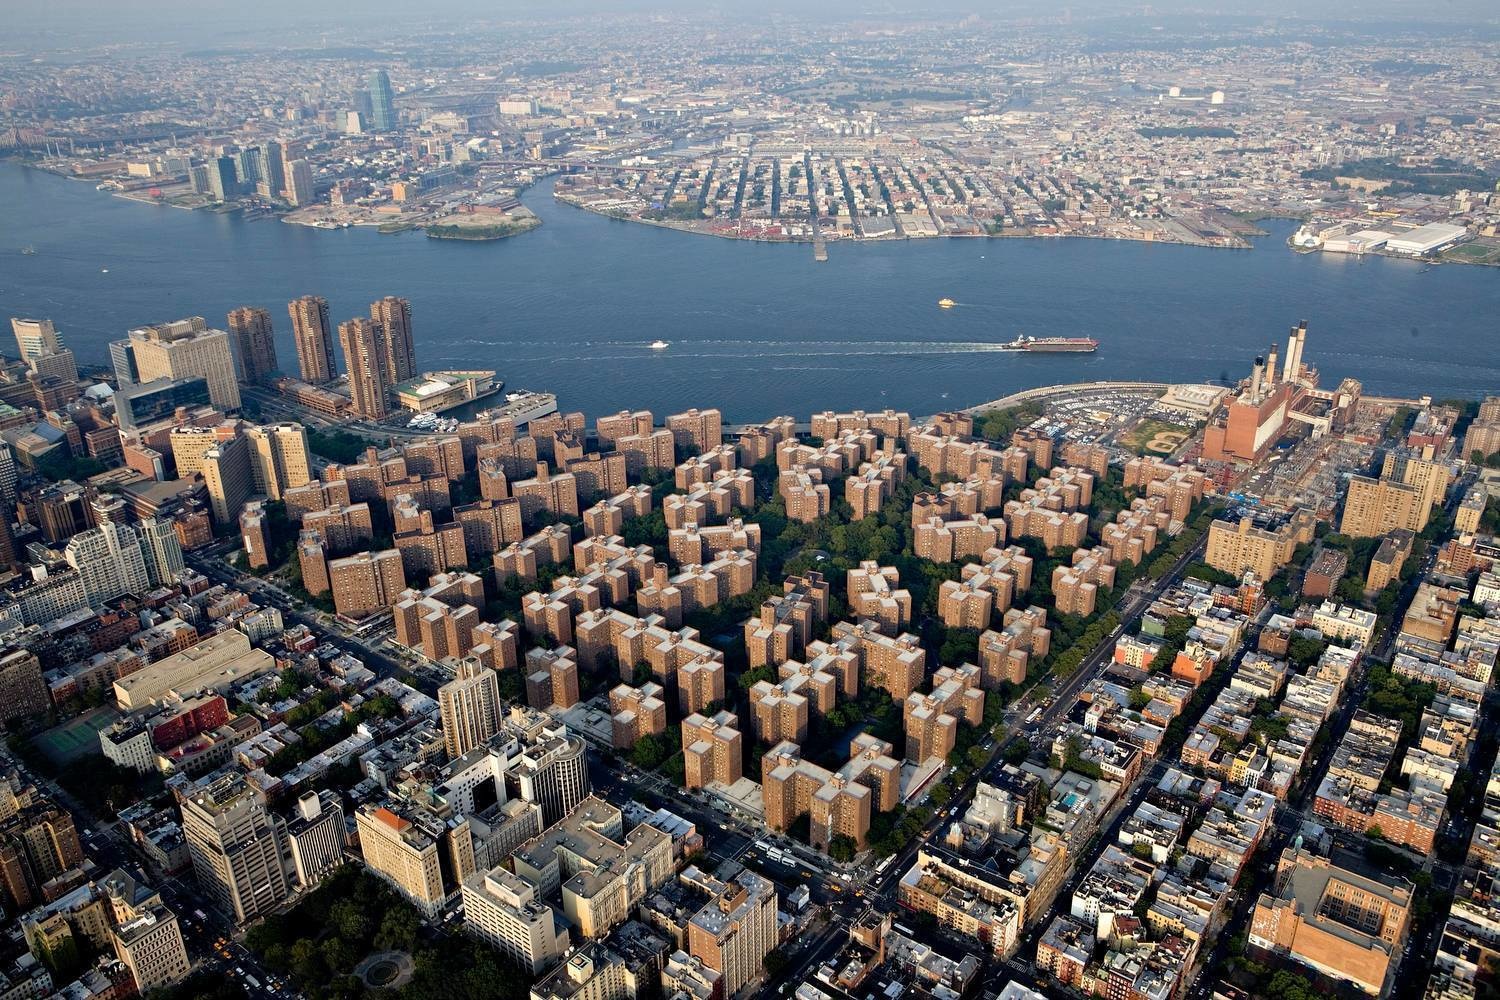 Stuyvesant Town, Manhattan's largest apartment complex.